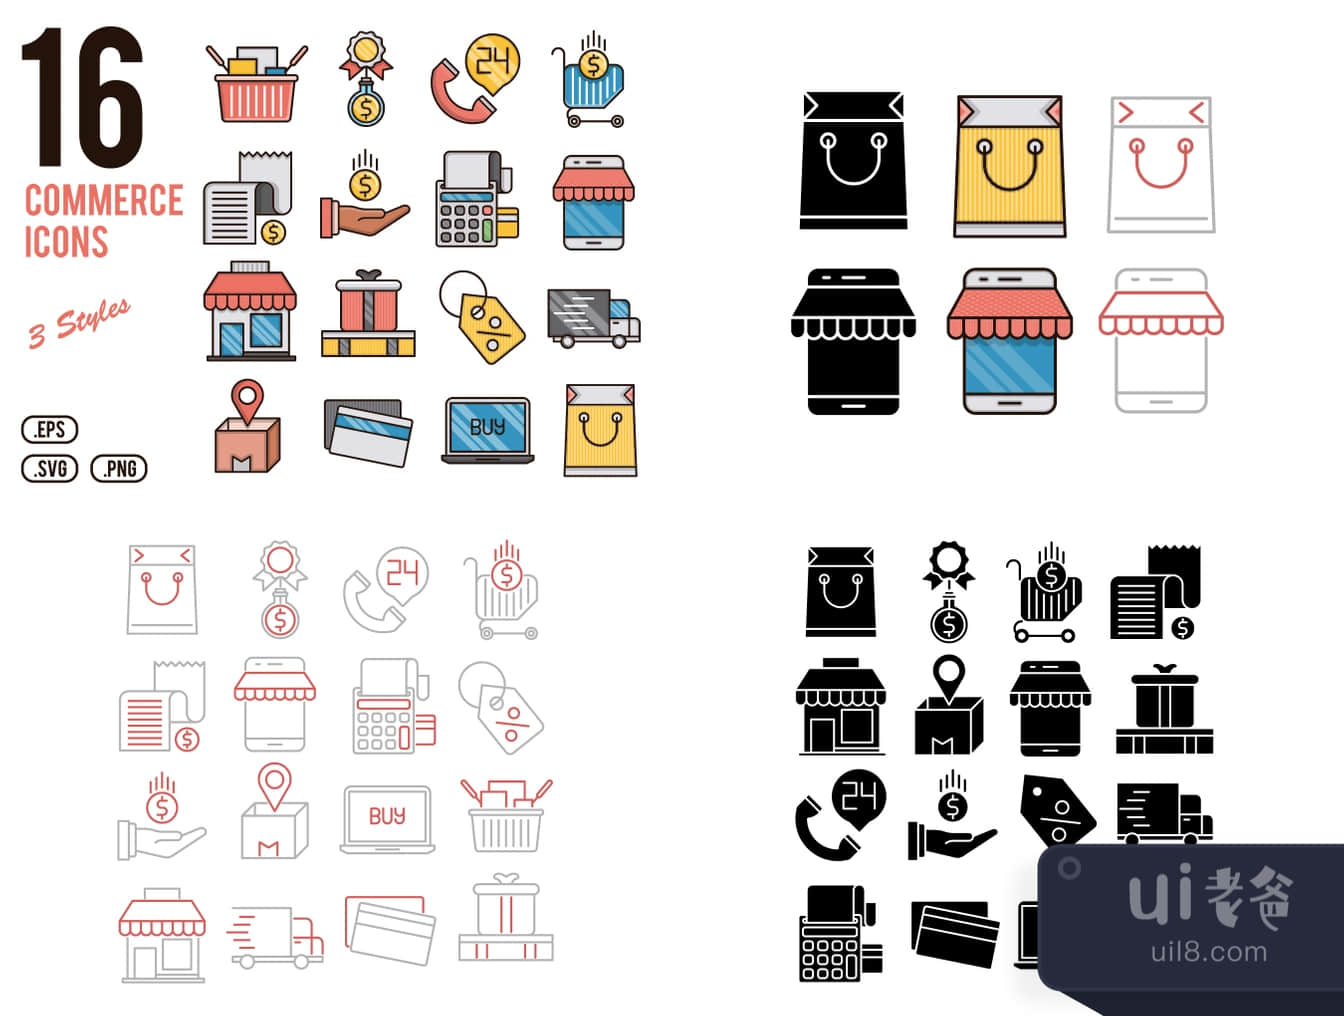 16个商业图标 (16 Commerce Icons)插图